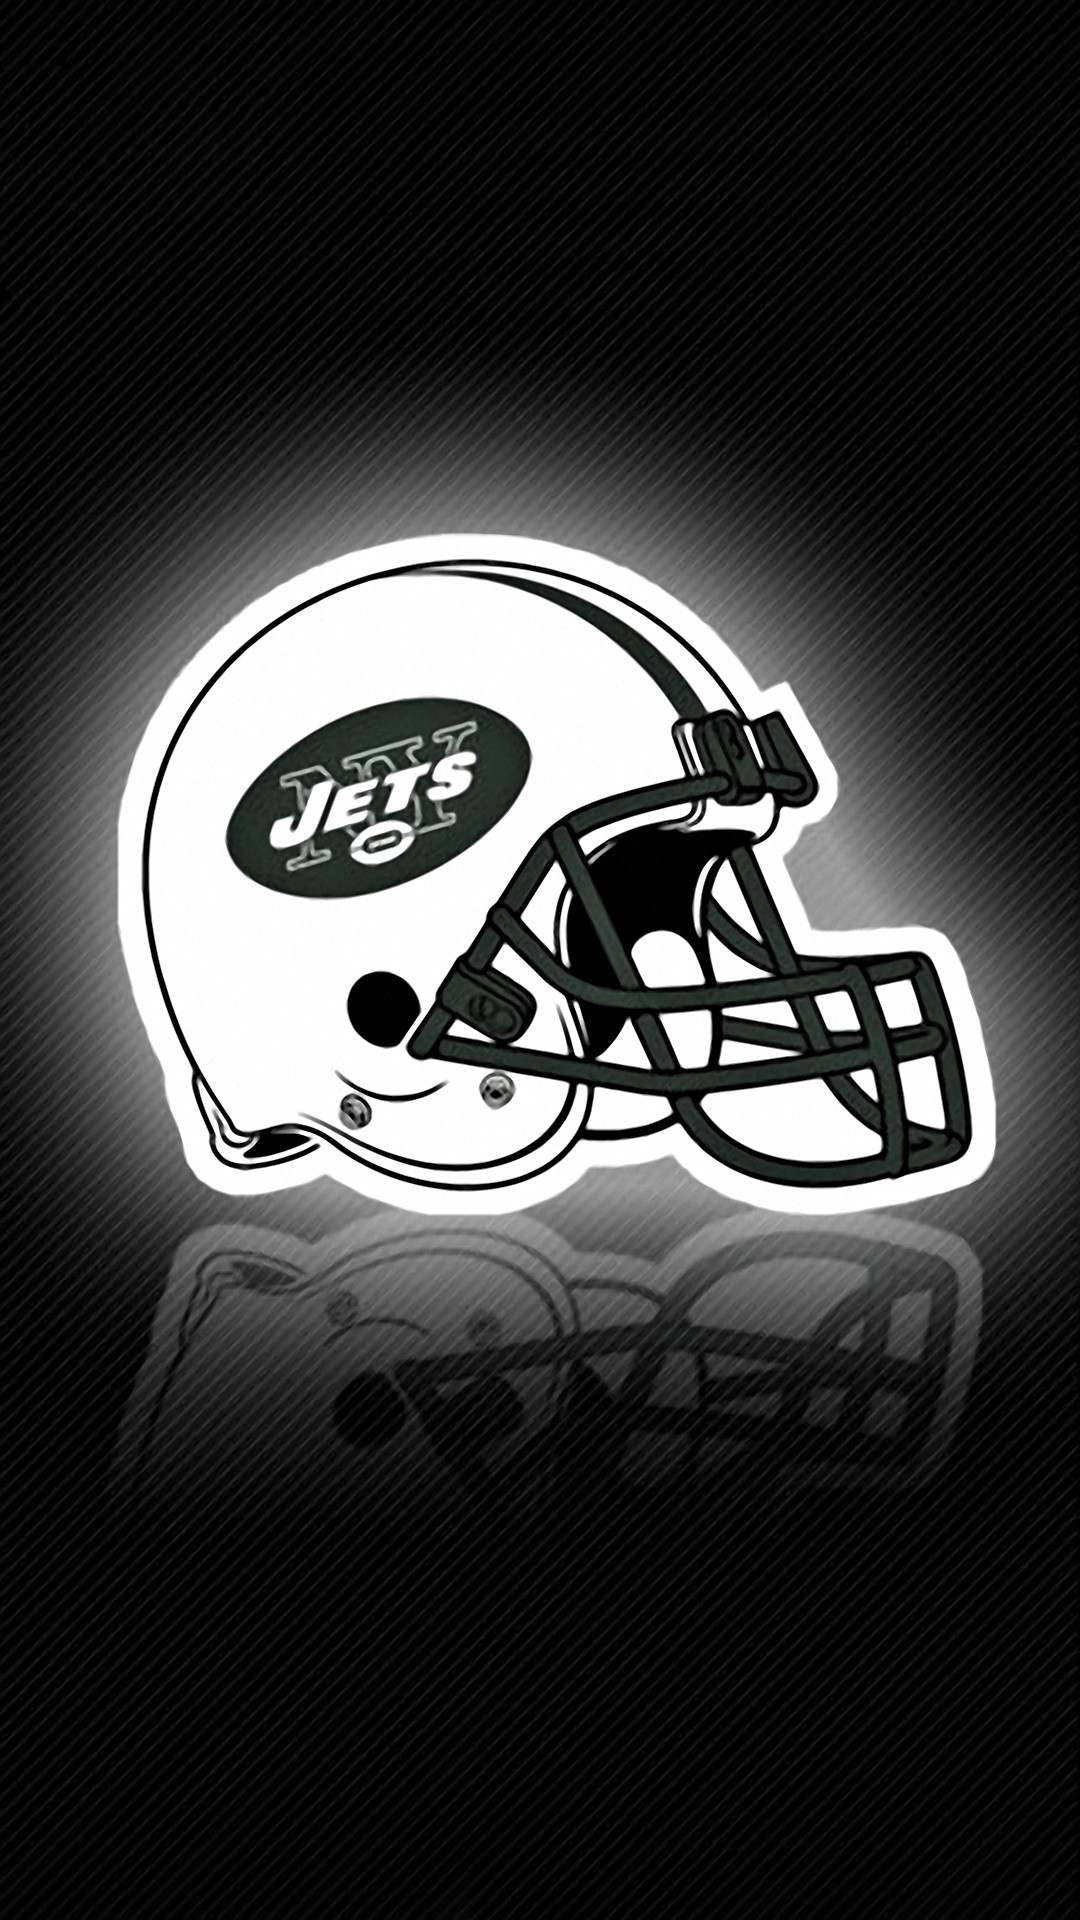 1080x1920 New York Jets Live Wallpaper Download New York Jets Live